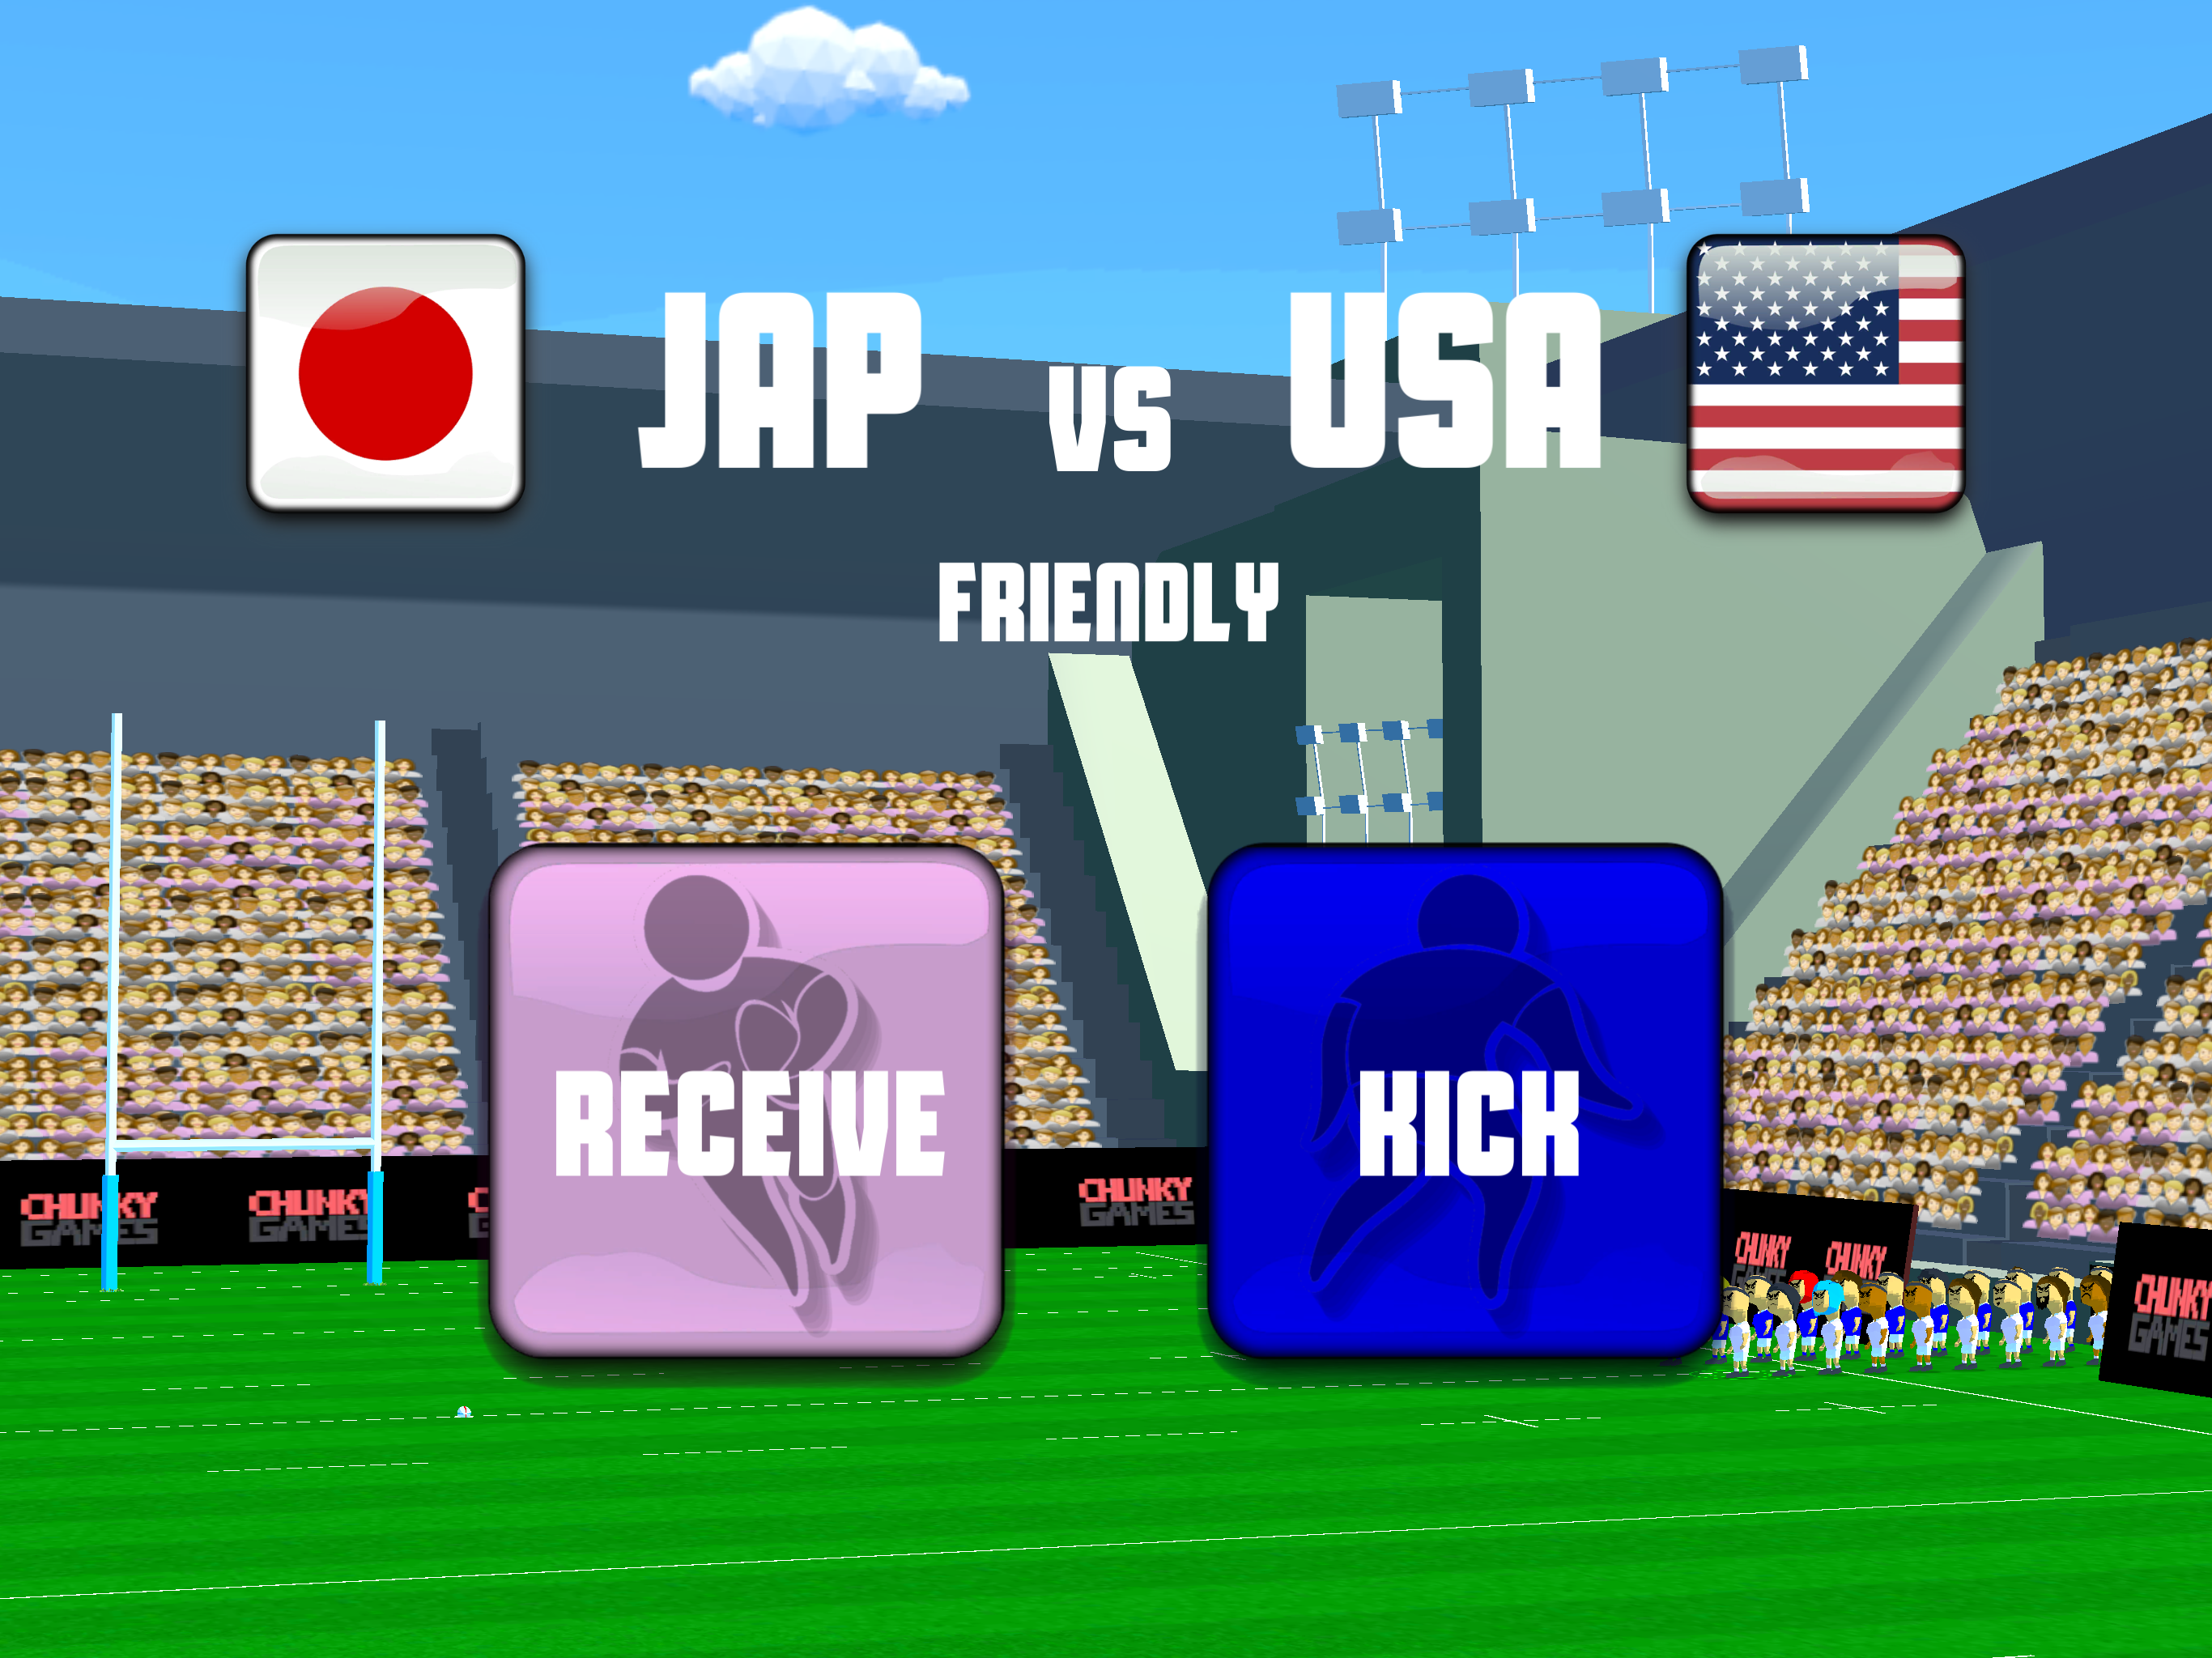 Rugby World Championship 2 screenshot game